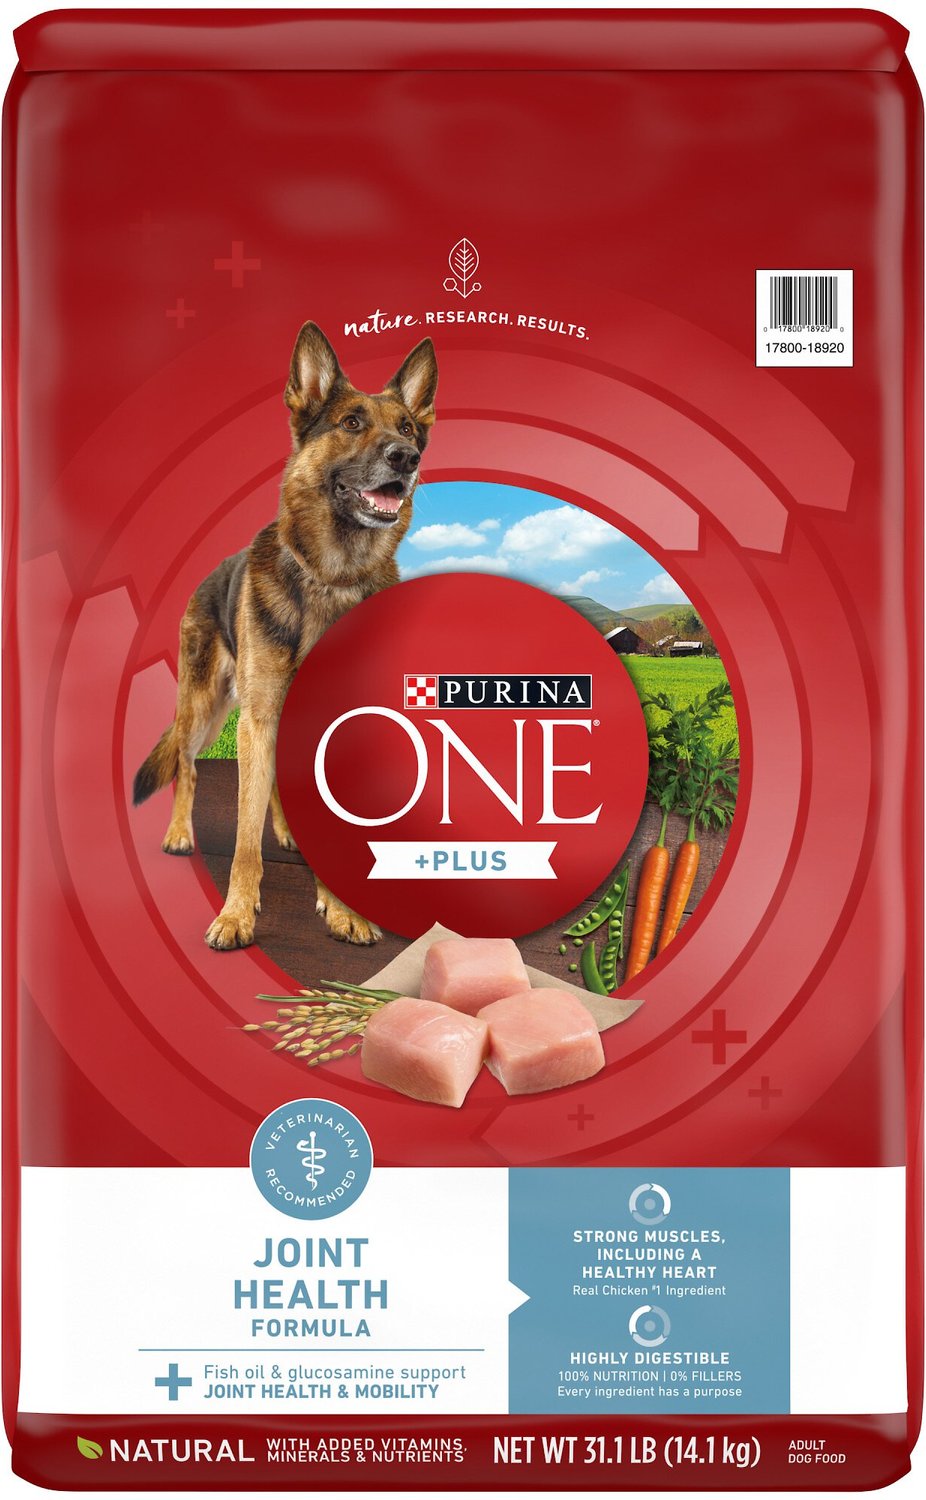 Purina ONE + Plus Joint Health Formula Adult Dry Dog Food